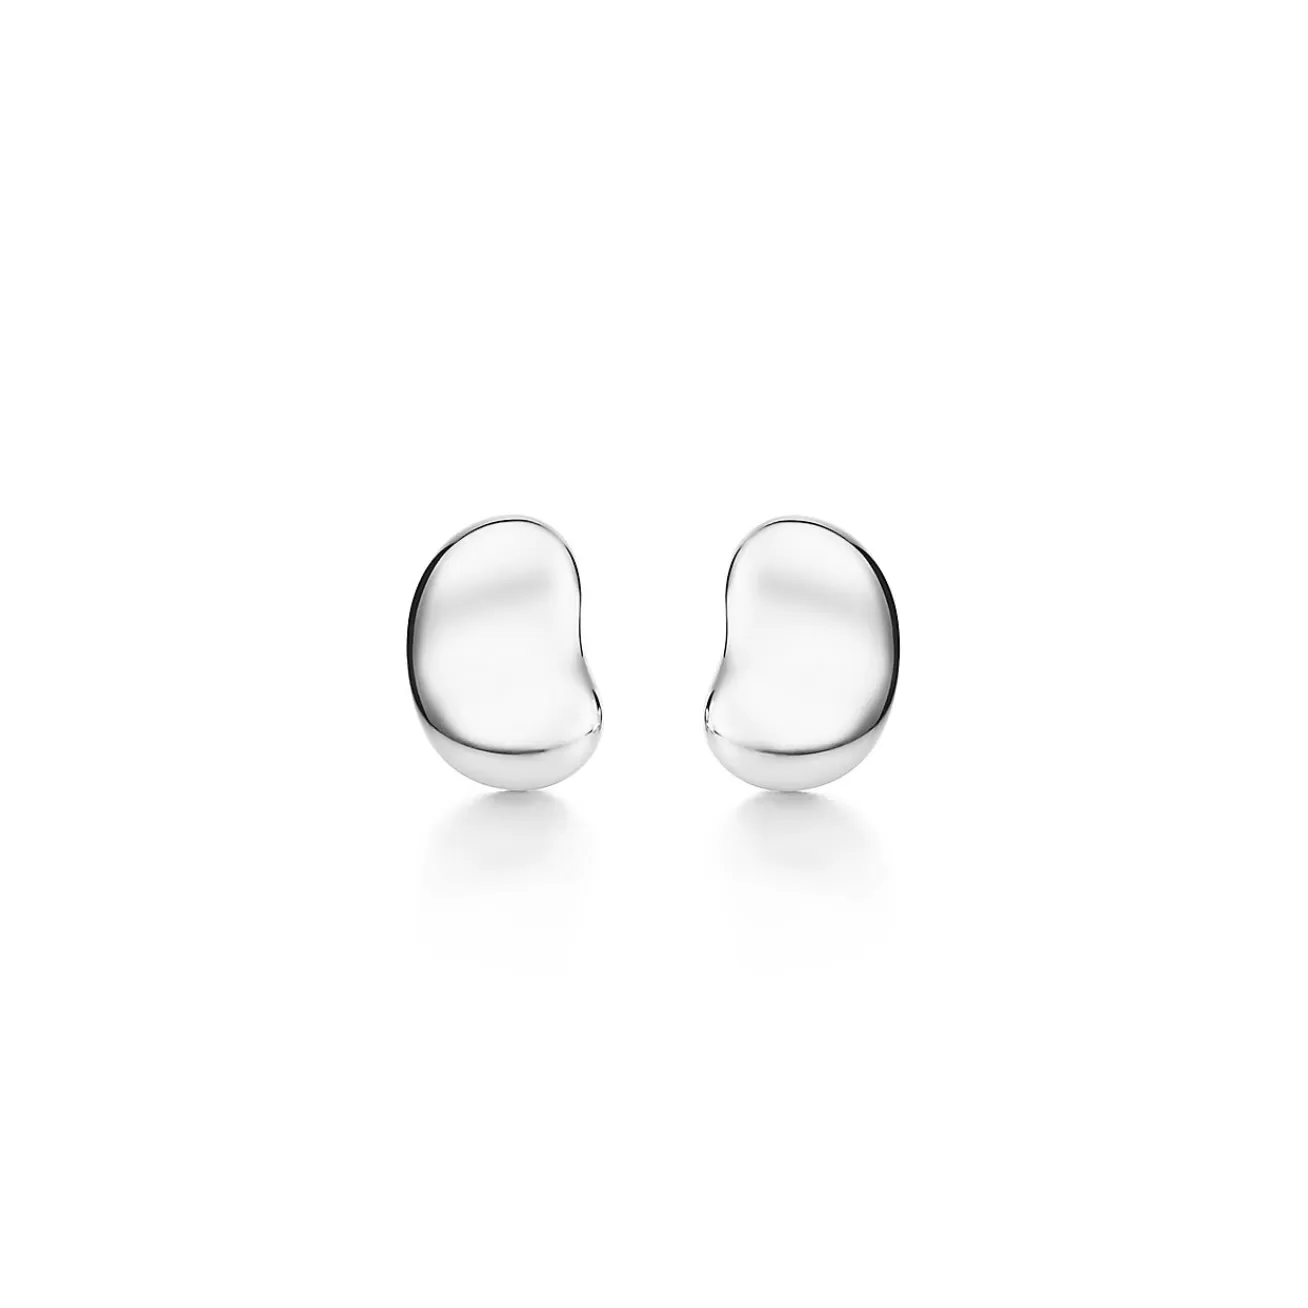 Tiffany & Co. Elsa Peretti® Bean® design Earrings in Sterling Silver, 9 mm | ^ Earrings | Sterling Silver Jewelry